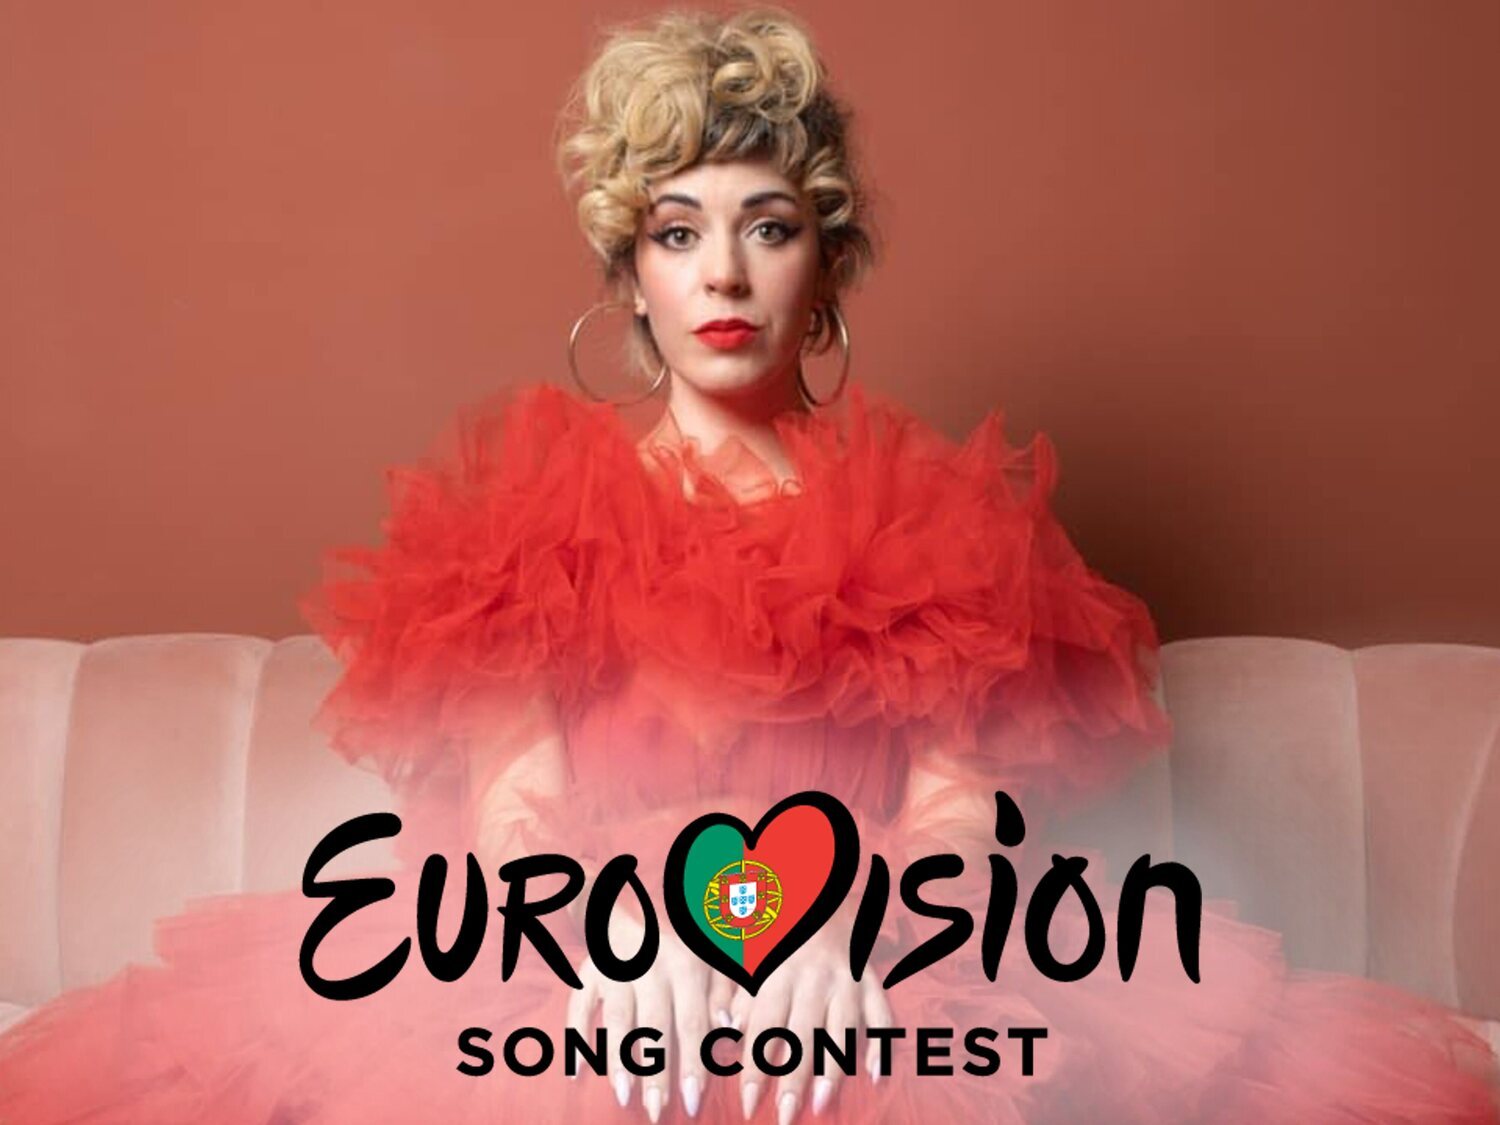 Mimicat gana el Festival da Cançao y representará a Portugal en Eurovisión 2023